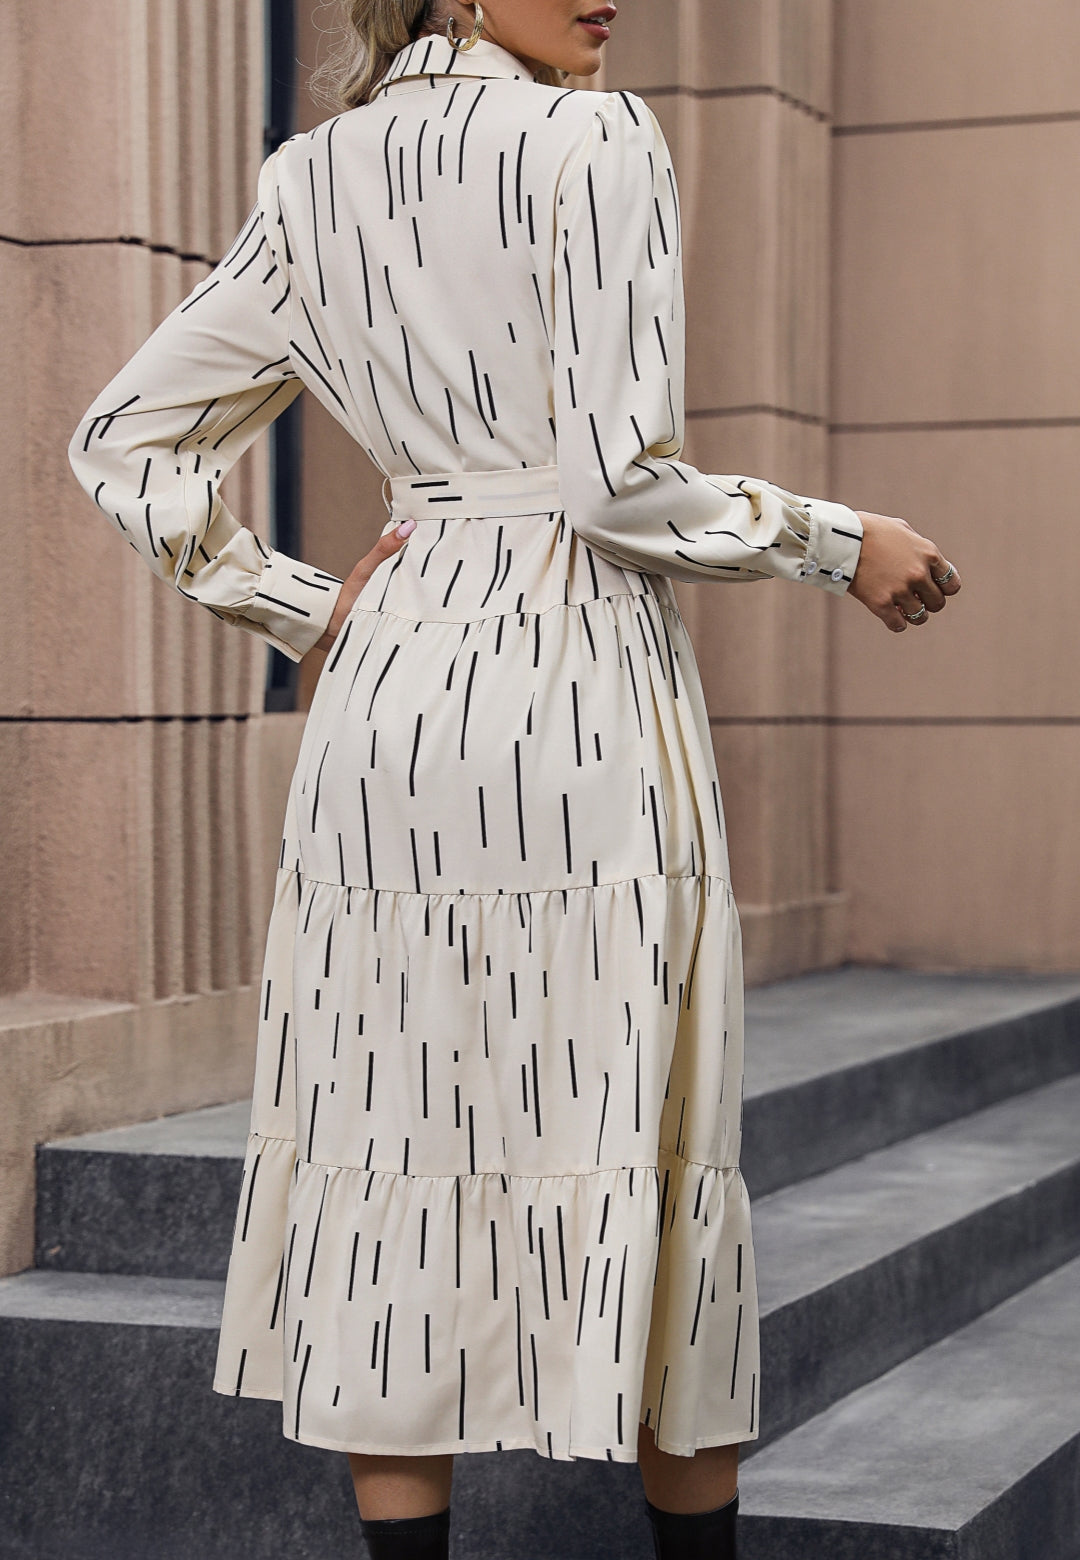 Abstract Print Tiered Button Down Shirt Dress Mid-Calf Length – Anna-Kaci